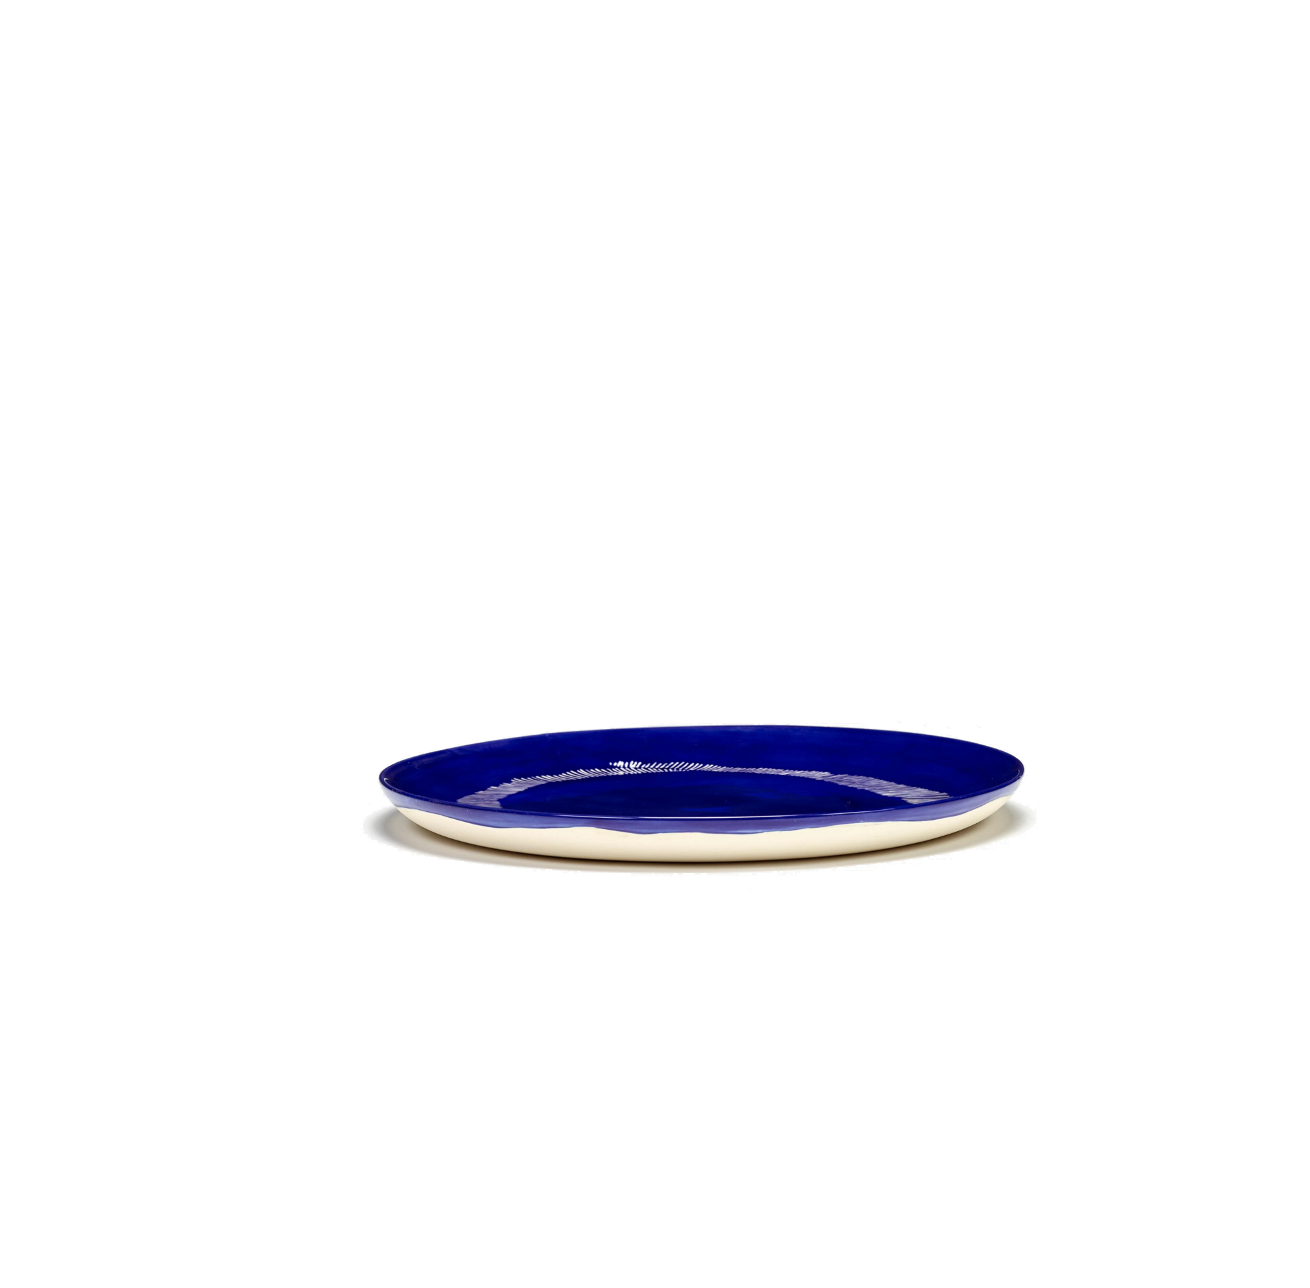 Feast Tableware Dinner plate dark blue/white stripes - SERAX